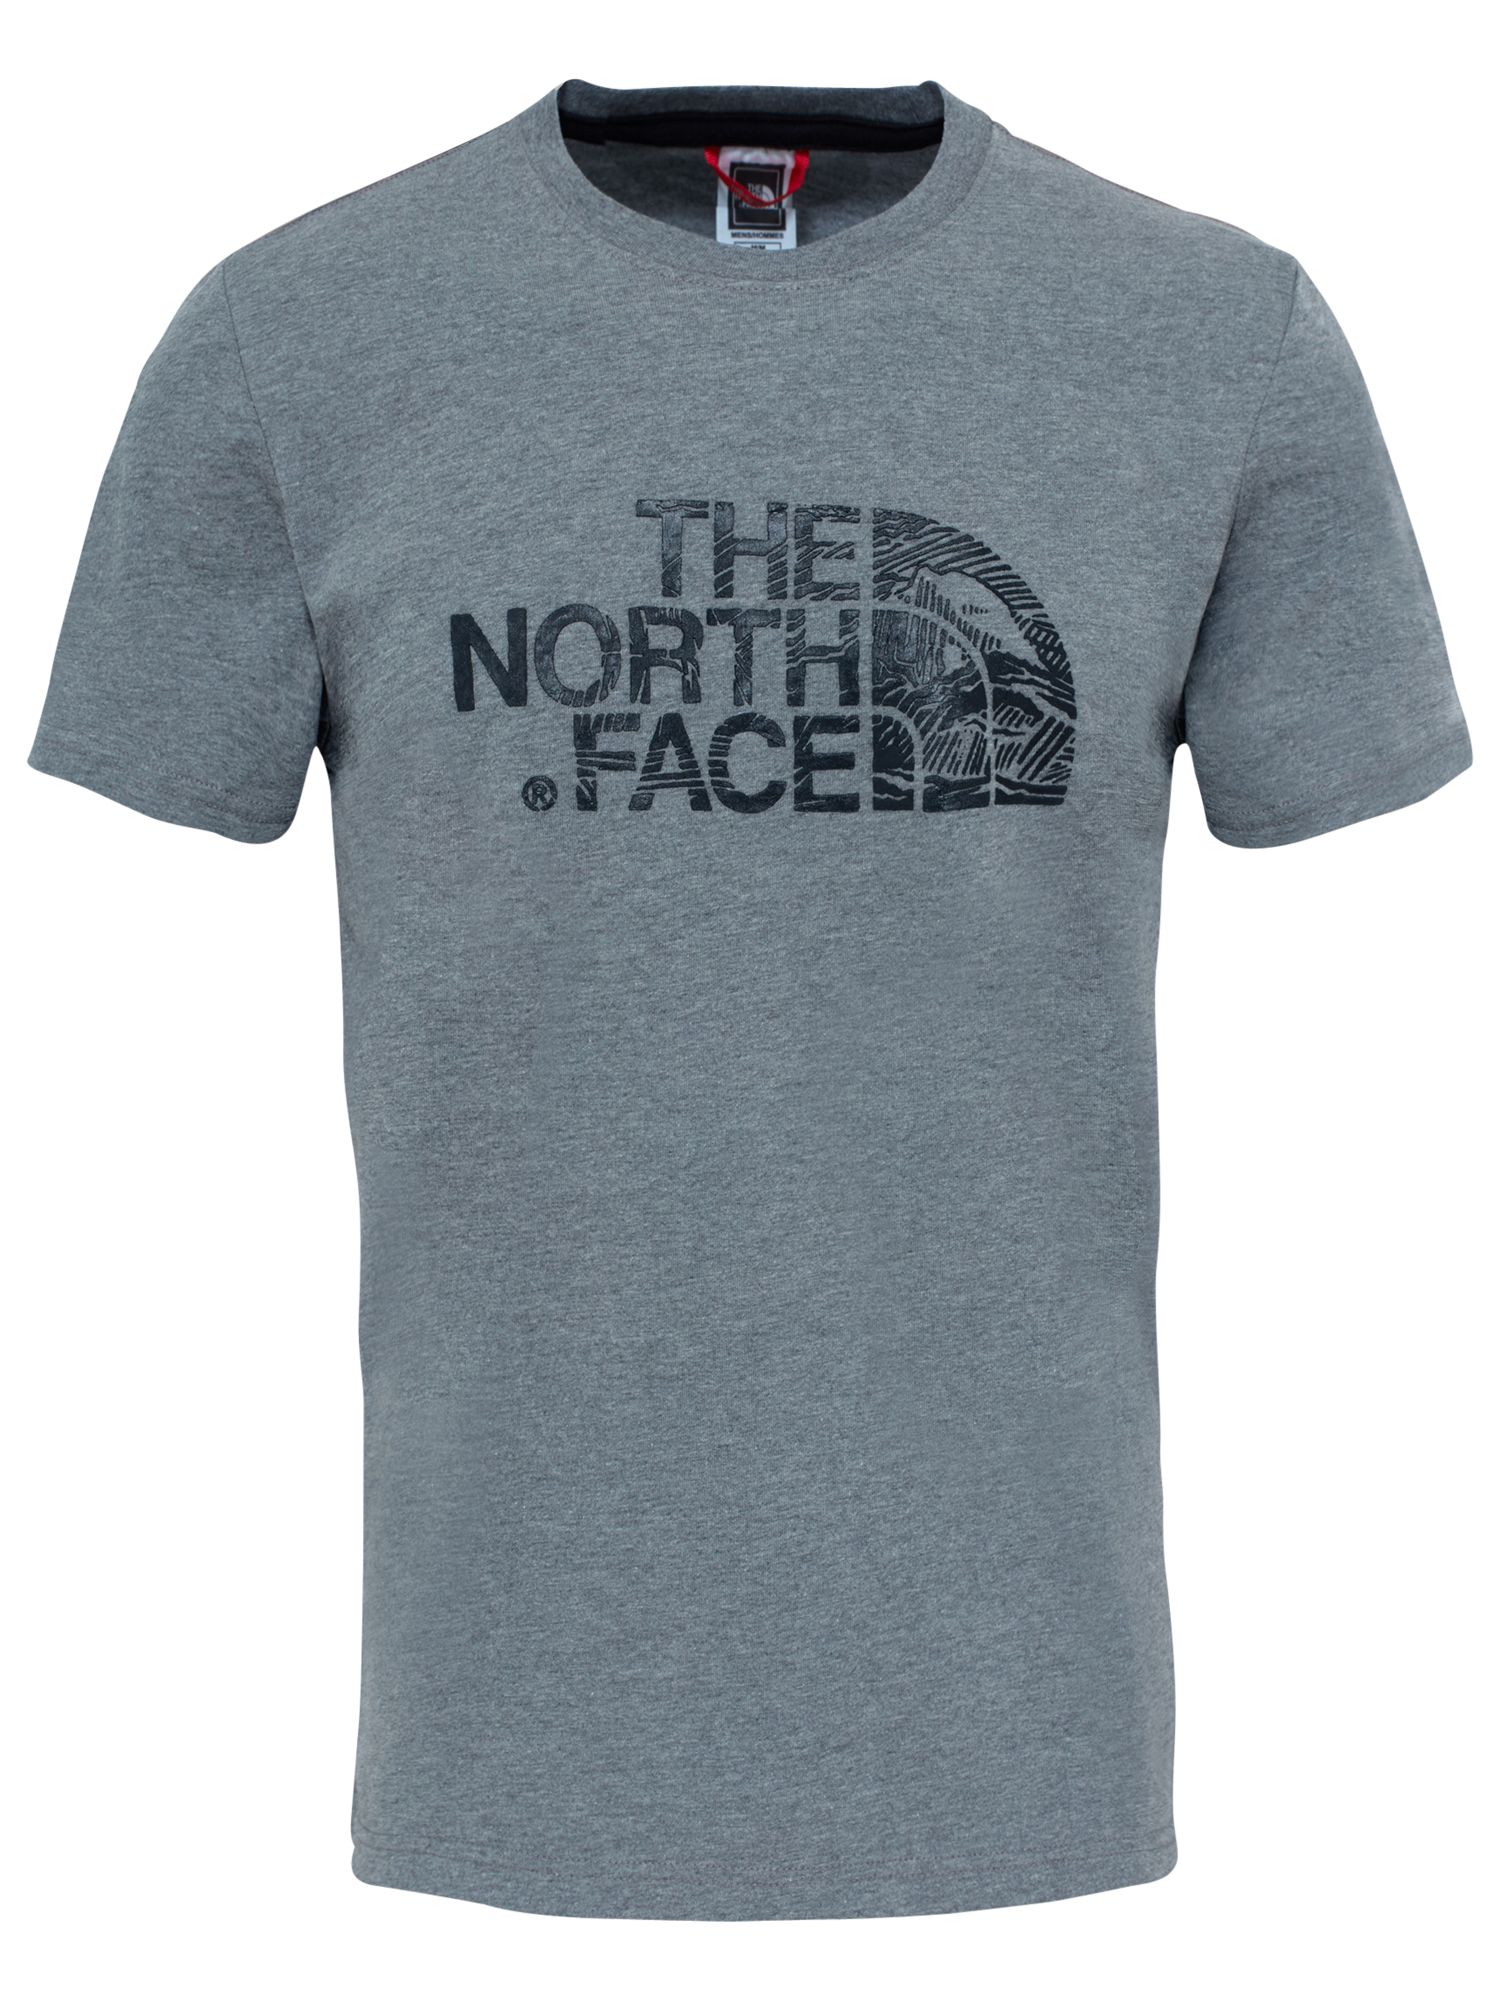 The North Face Woodcut Dome T-Shirt, Grey at John Lewis & Partners